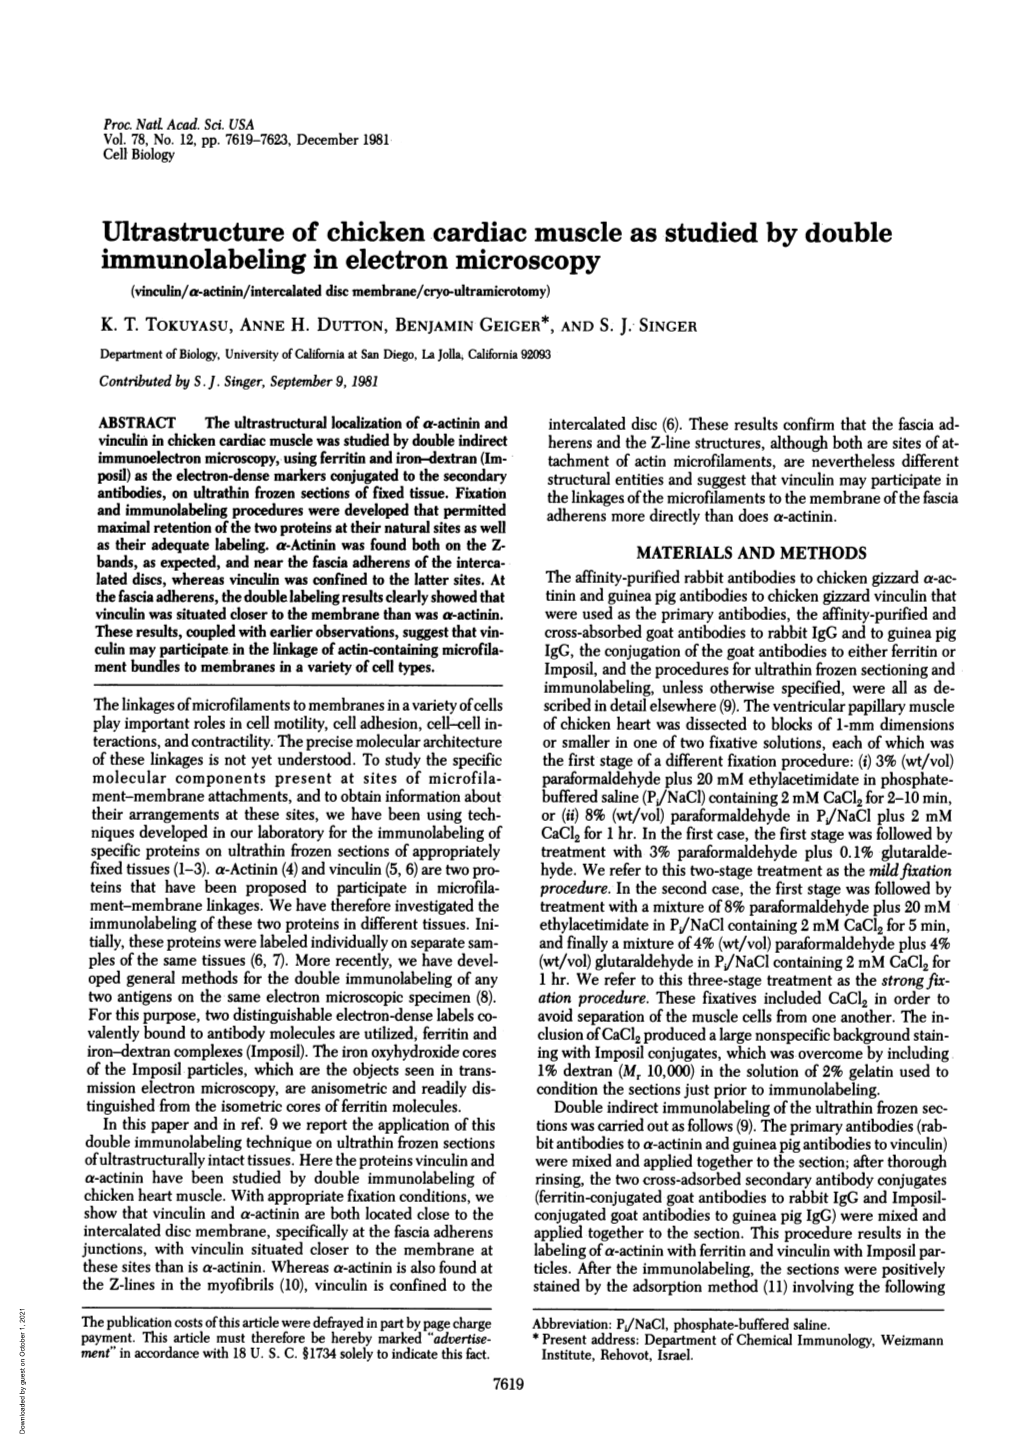 Immunolabeling in Electron Microscopy (Vinculin/A-Actinin/Intercalated Disc Membrane/Cryo-Ultramicrotomy) K